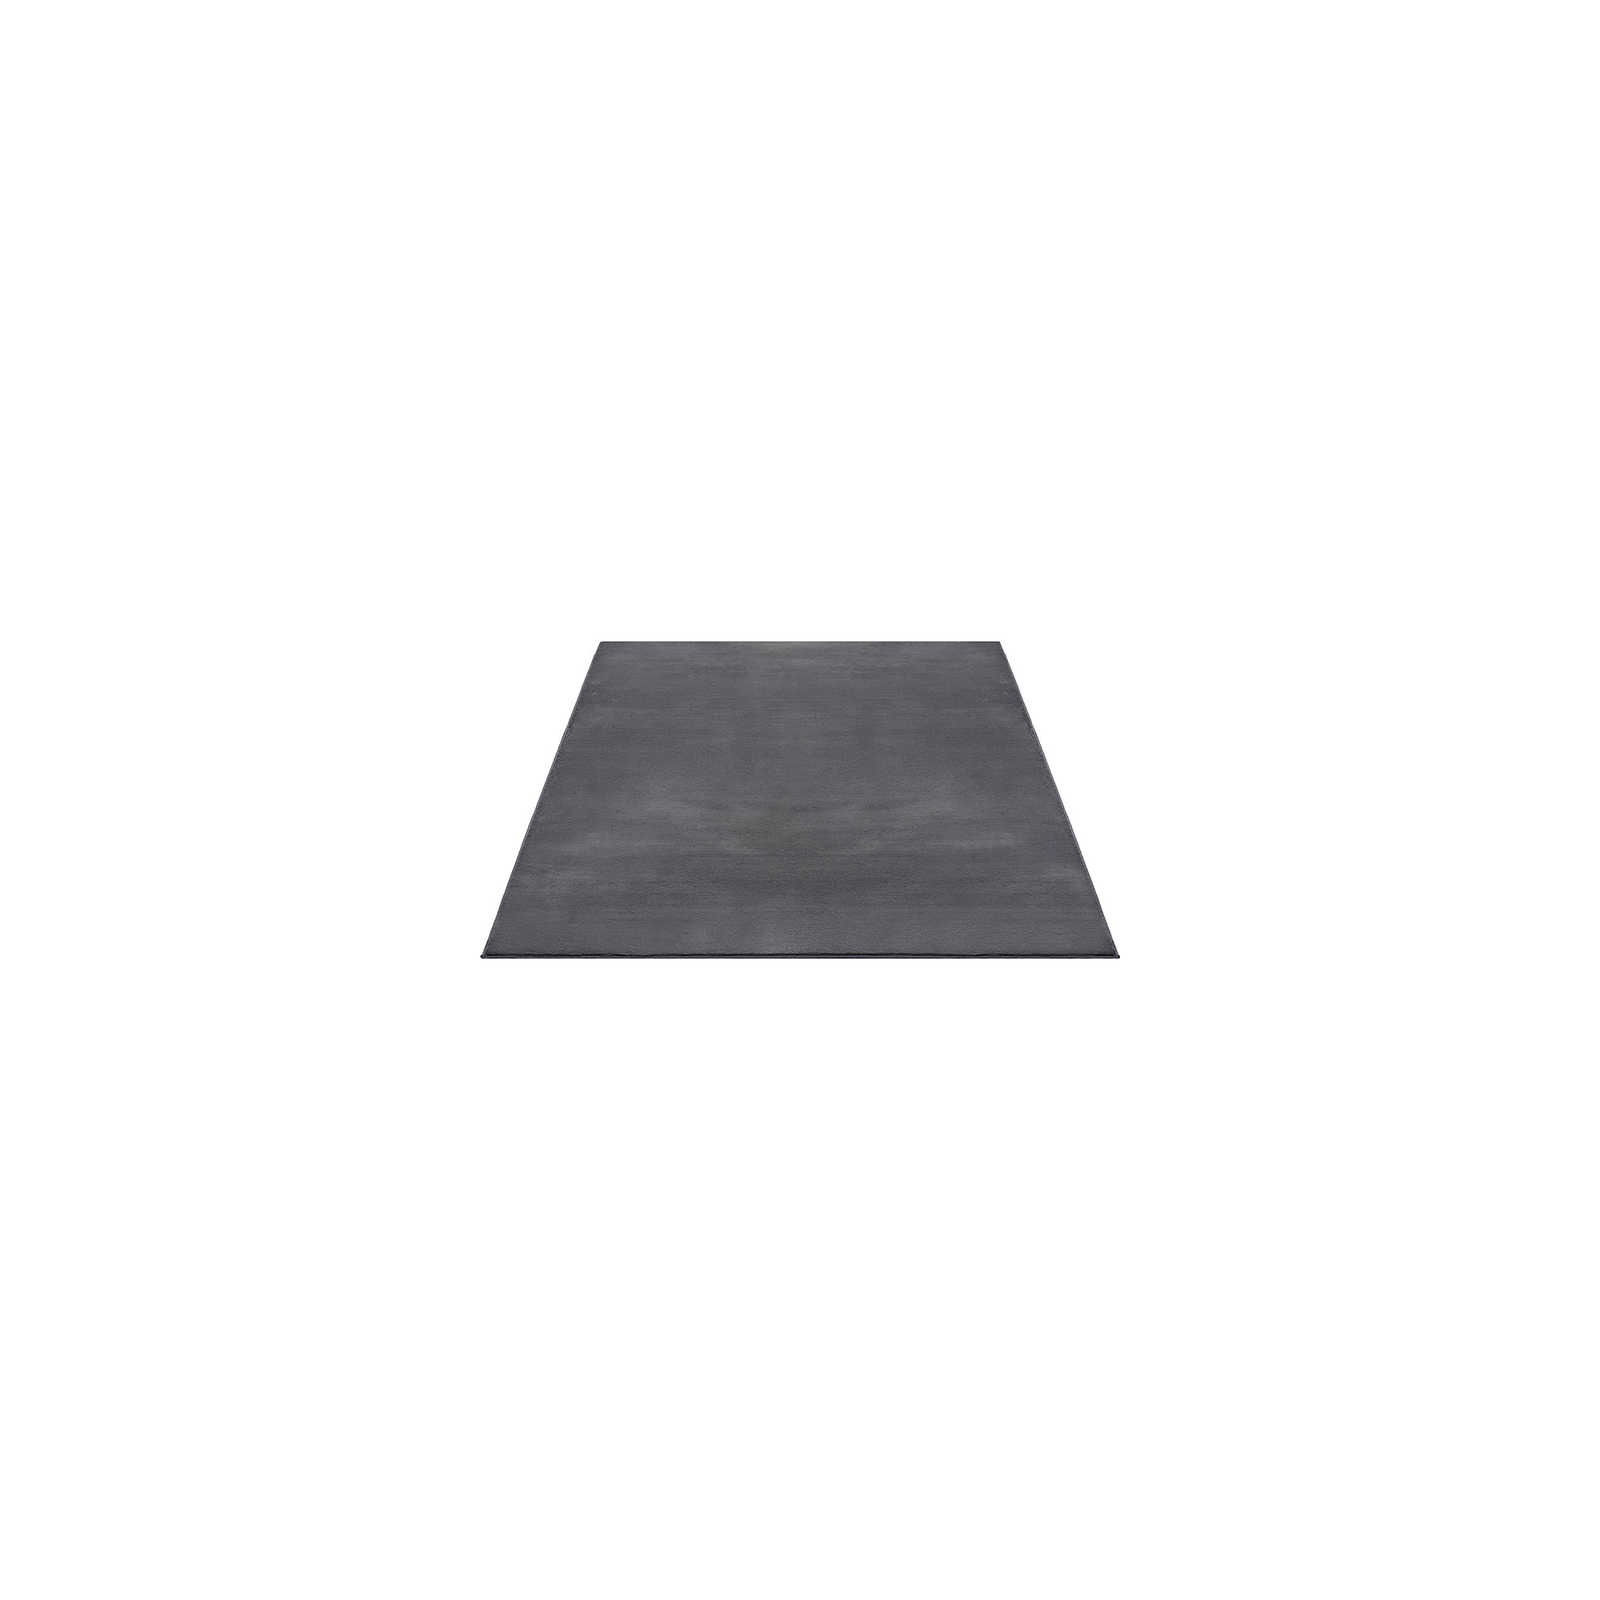 Soft deep pile carpet in anthracite - 140 x 70 cm
